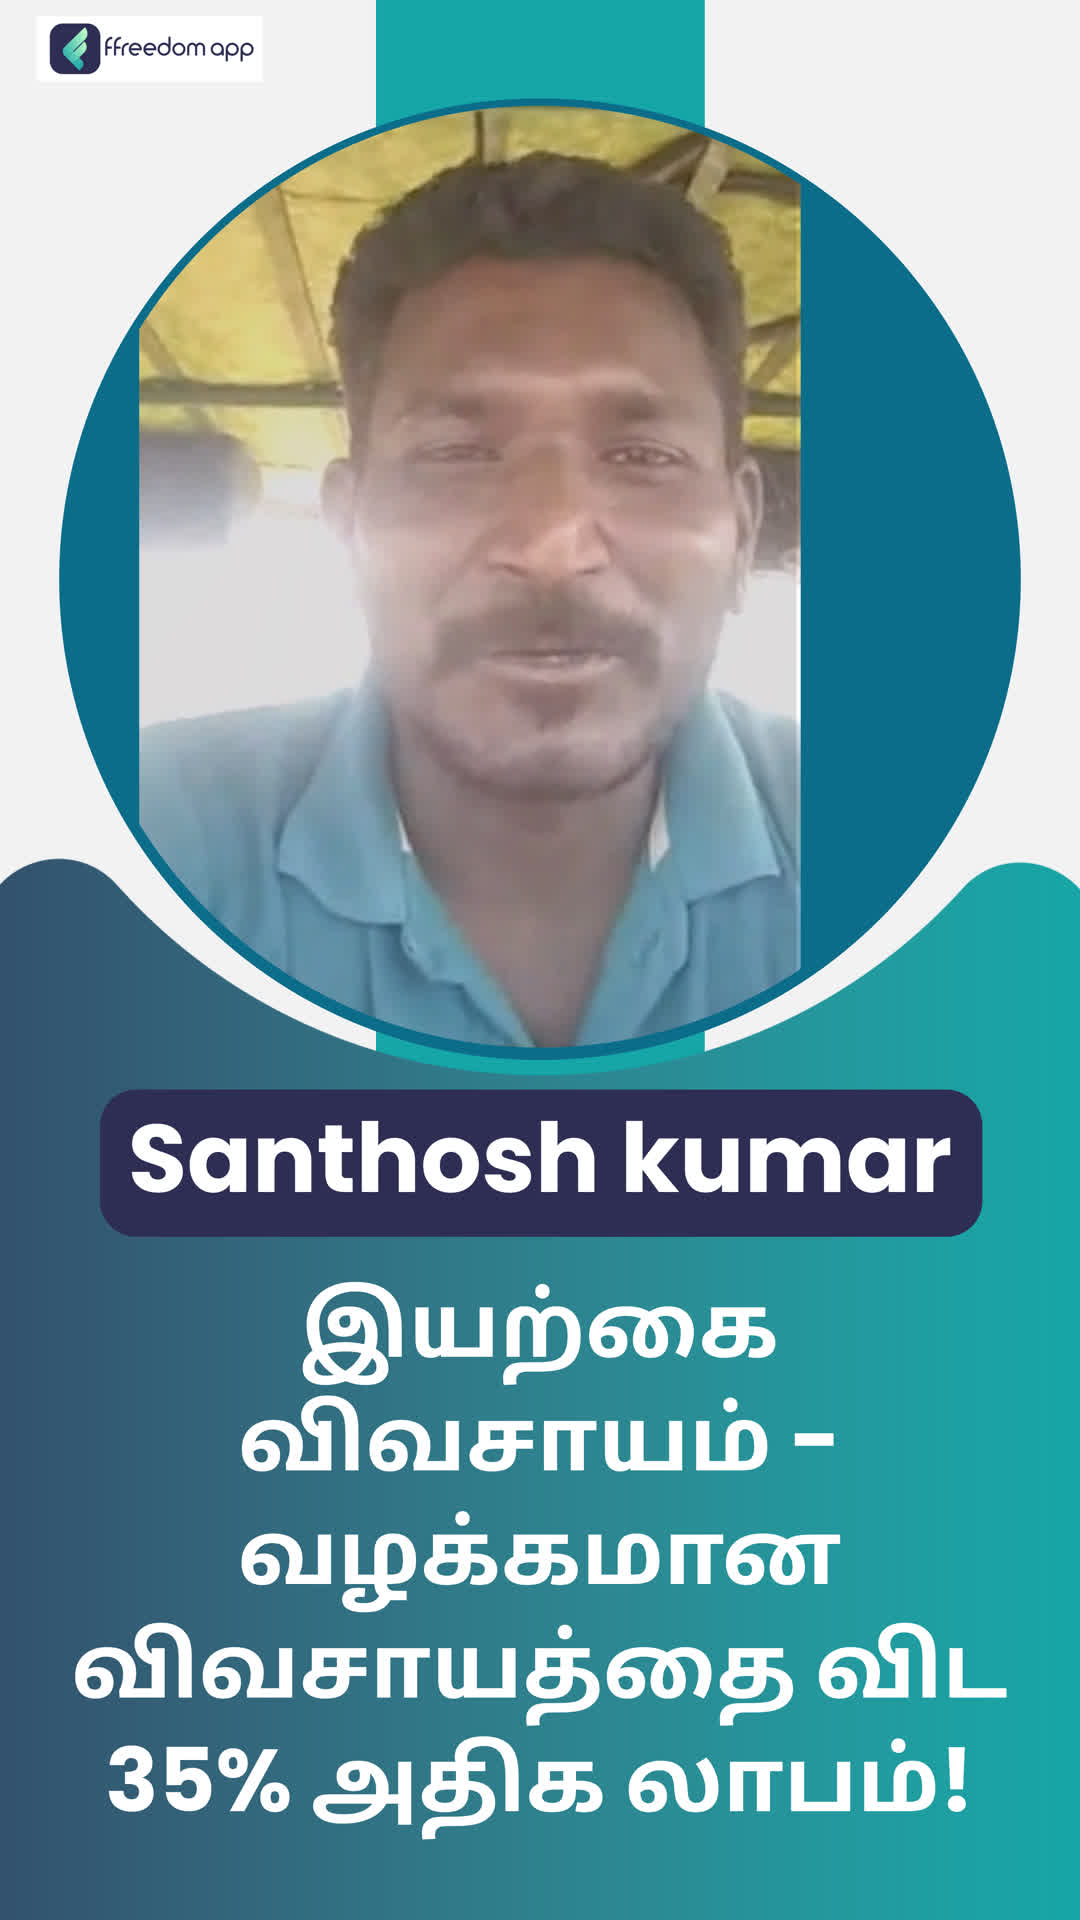 santhosh kumar's Honest Review of ffreedom app - Villupuram ,Tamil Nadu